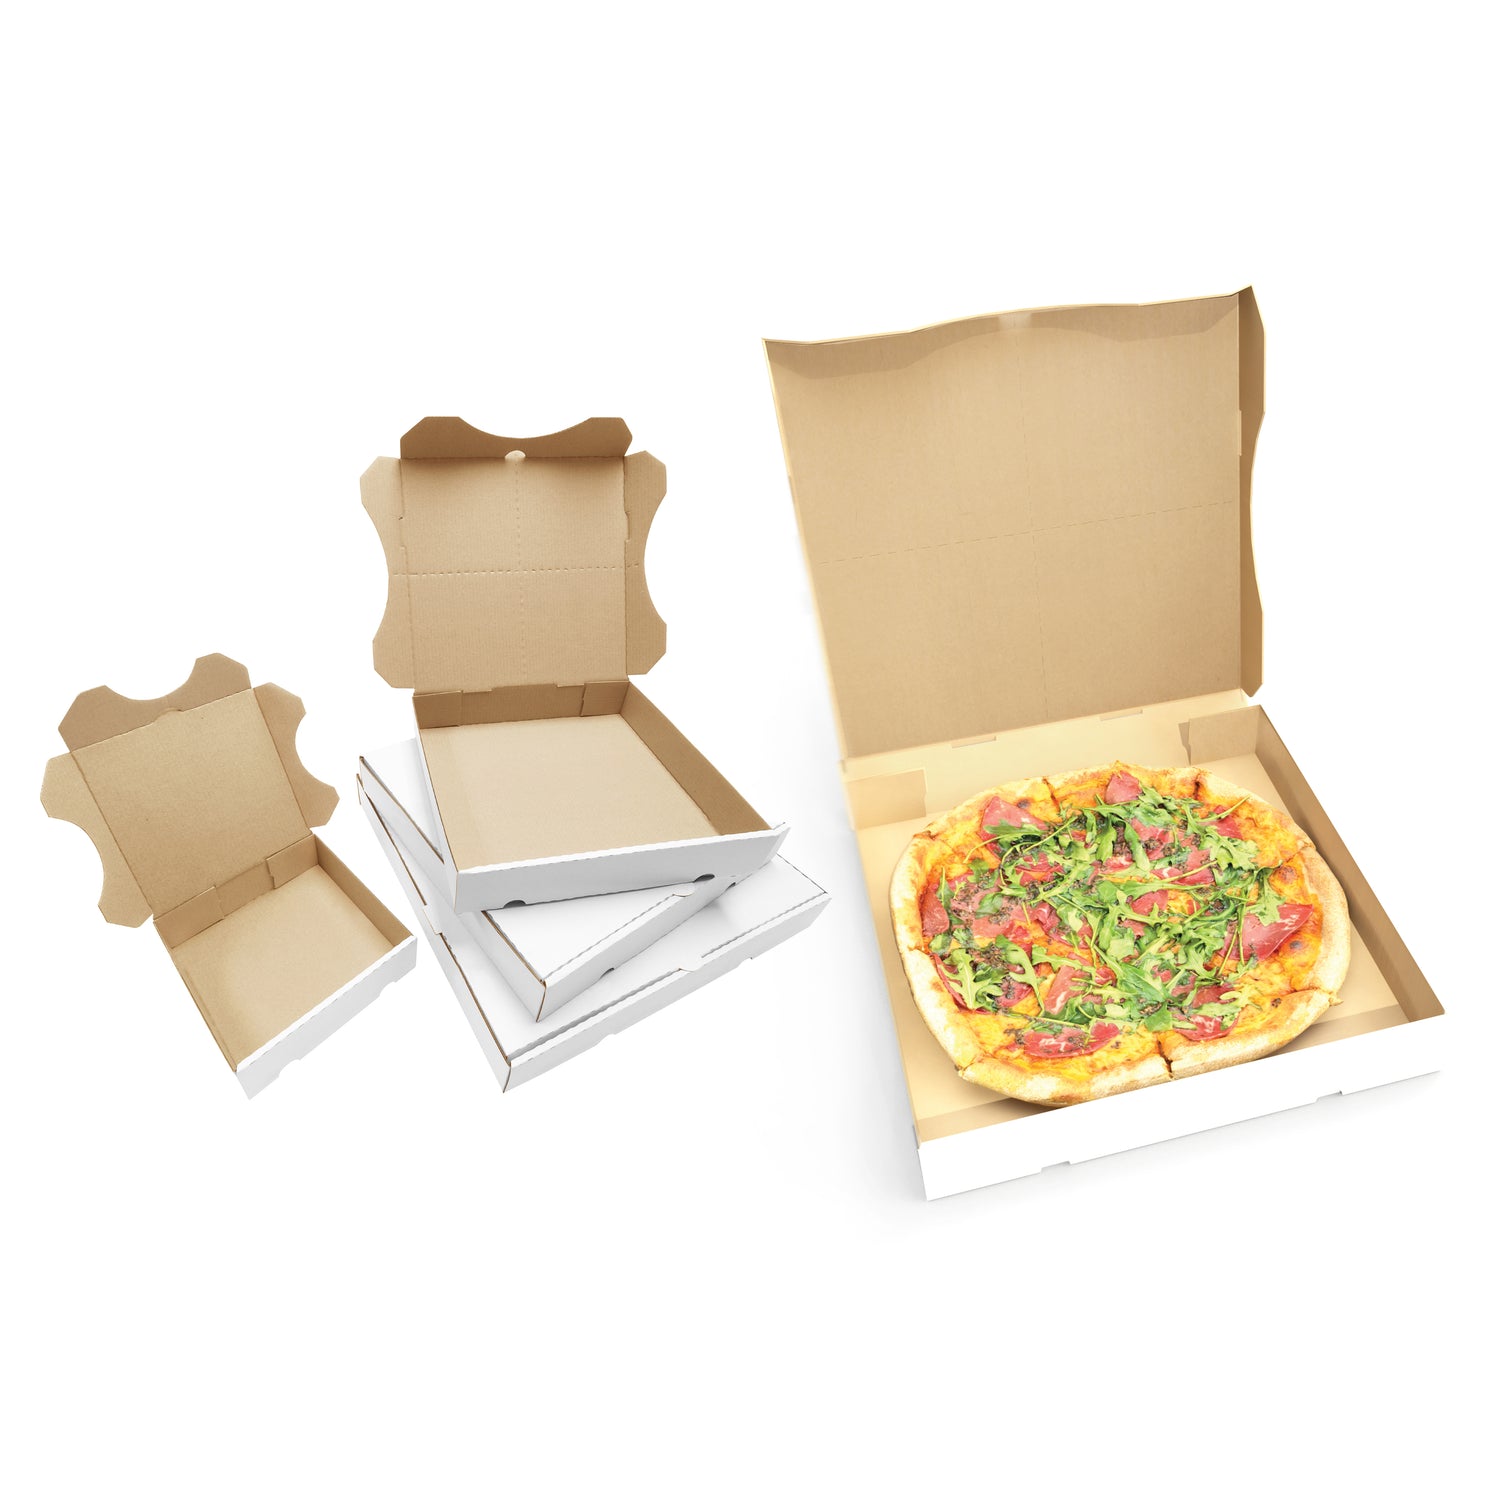 Pizza Box 薄餅盒(比薩盒) 50個pcs